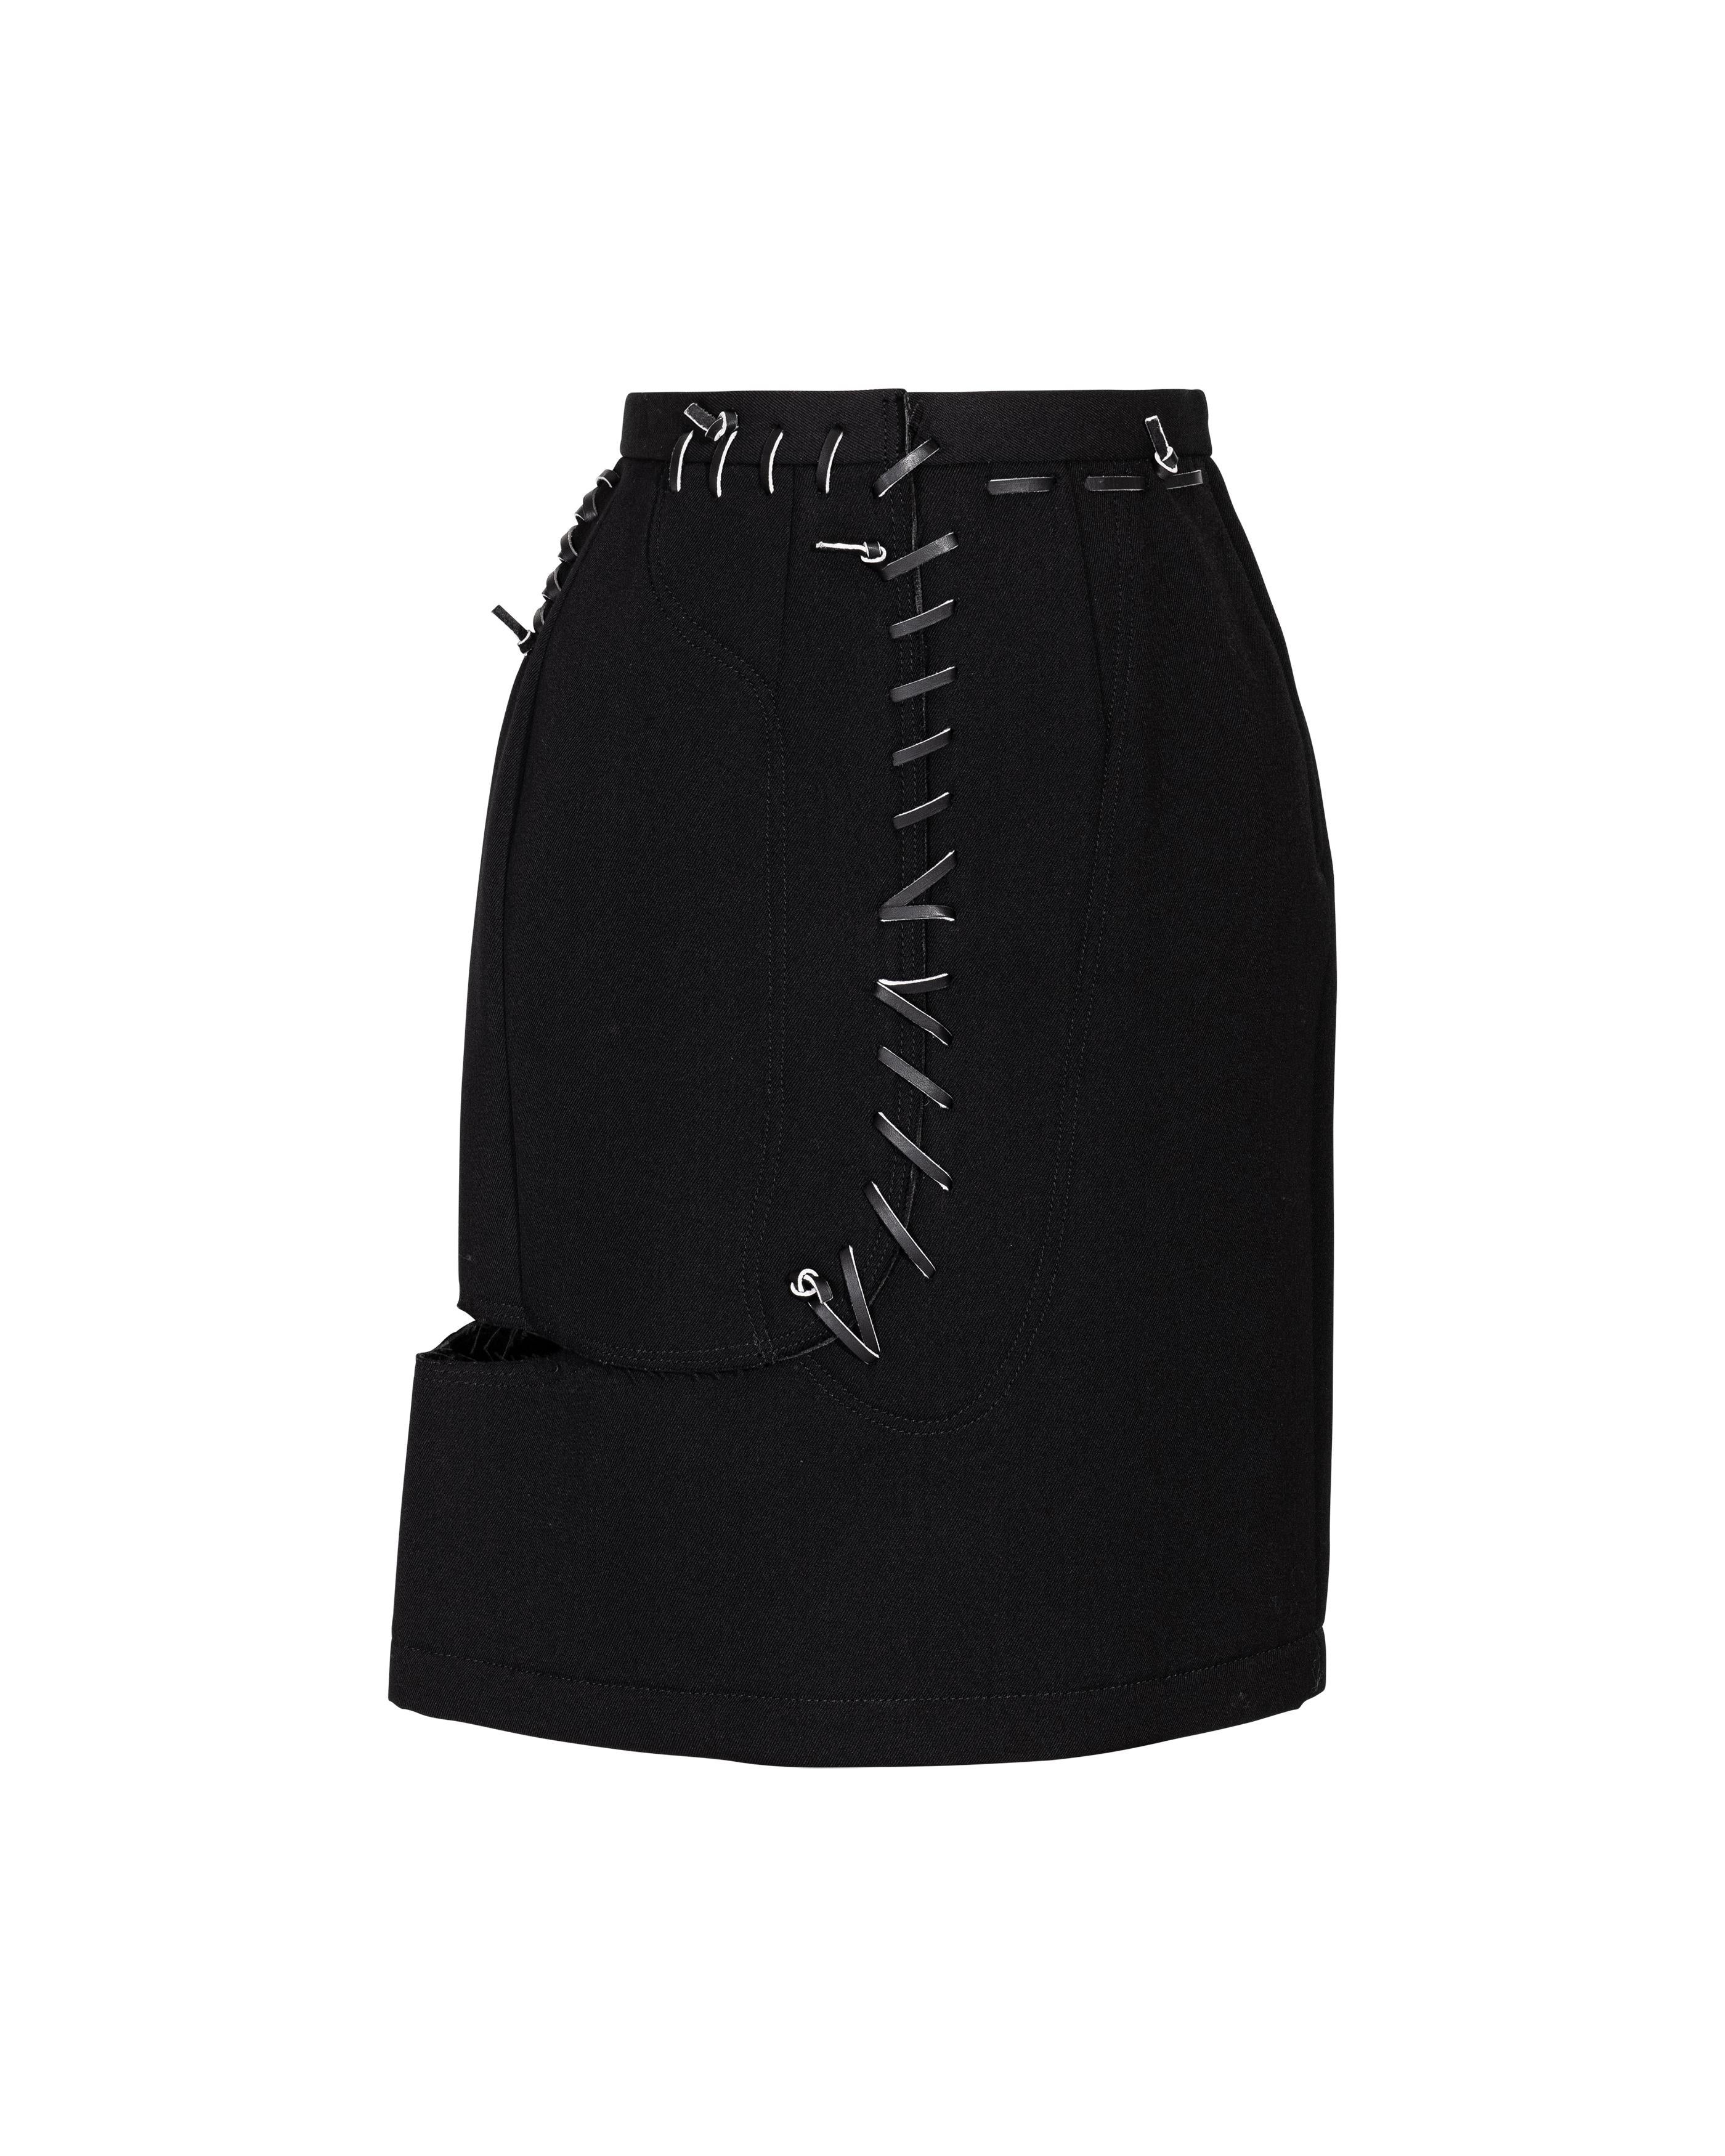 S/S 2005 Comme des Garcons Saddle Stitched Skirt Set For Sale 11